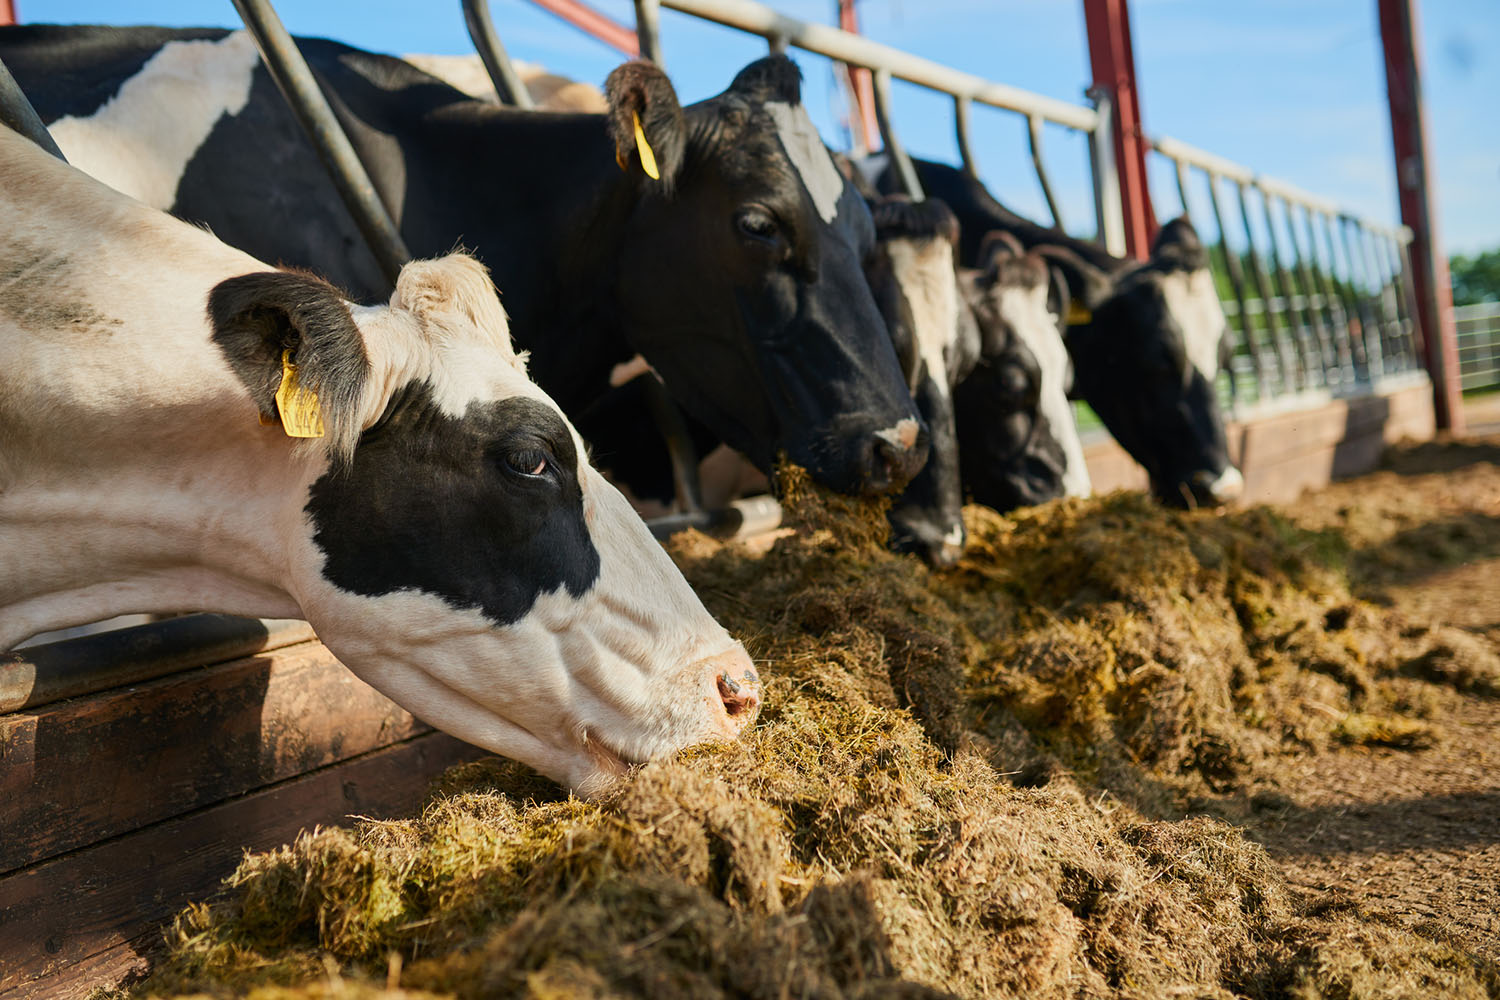 Where livestock agriculture fits in a net-zero future